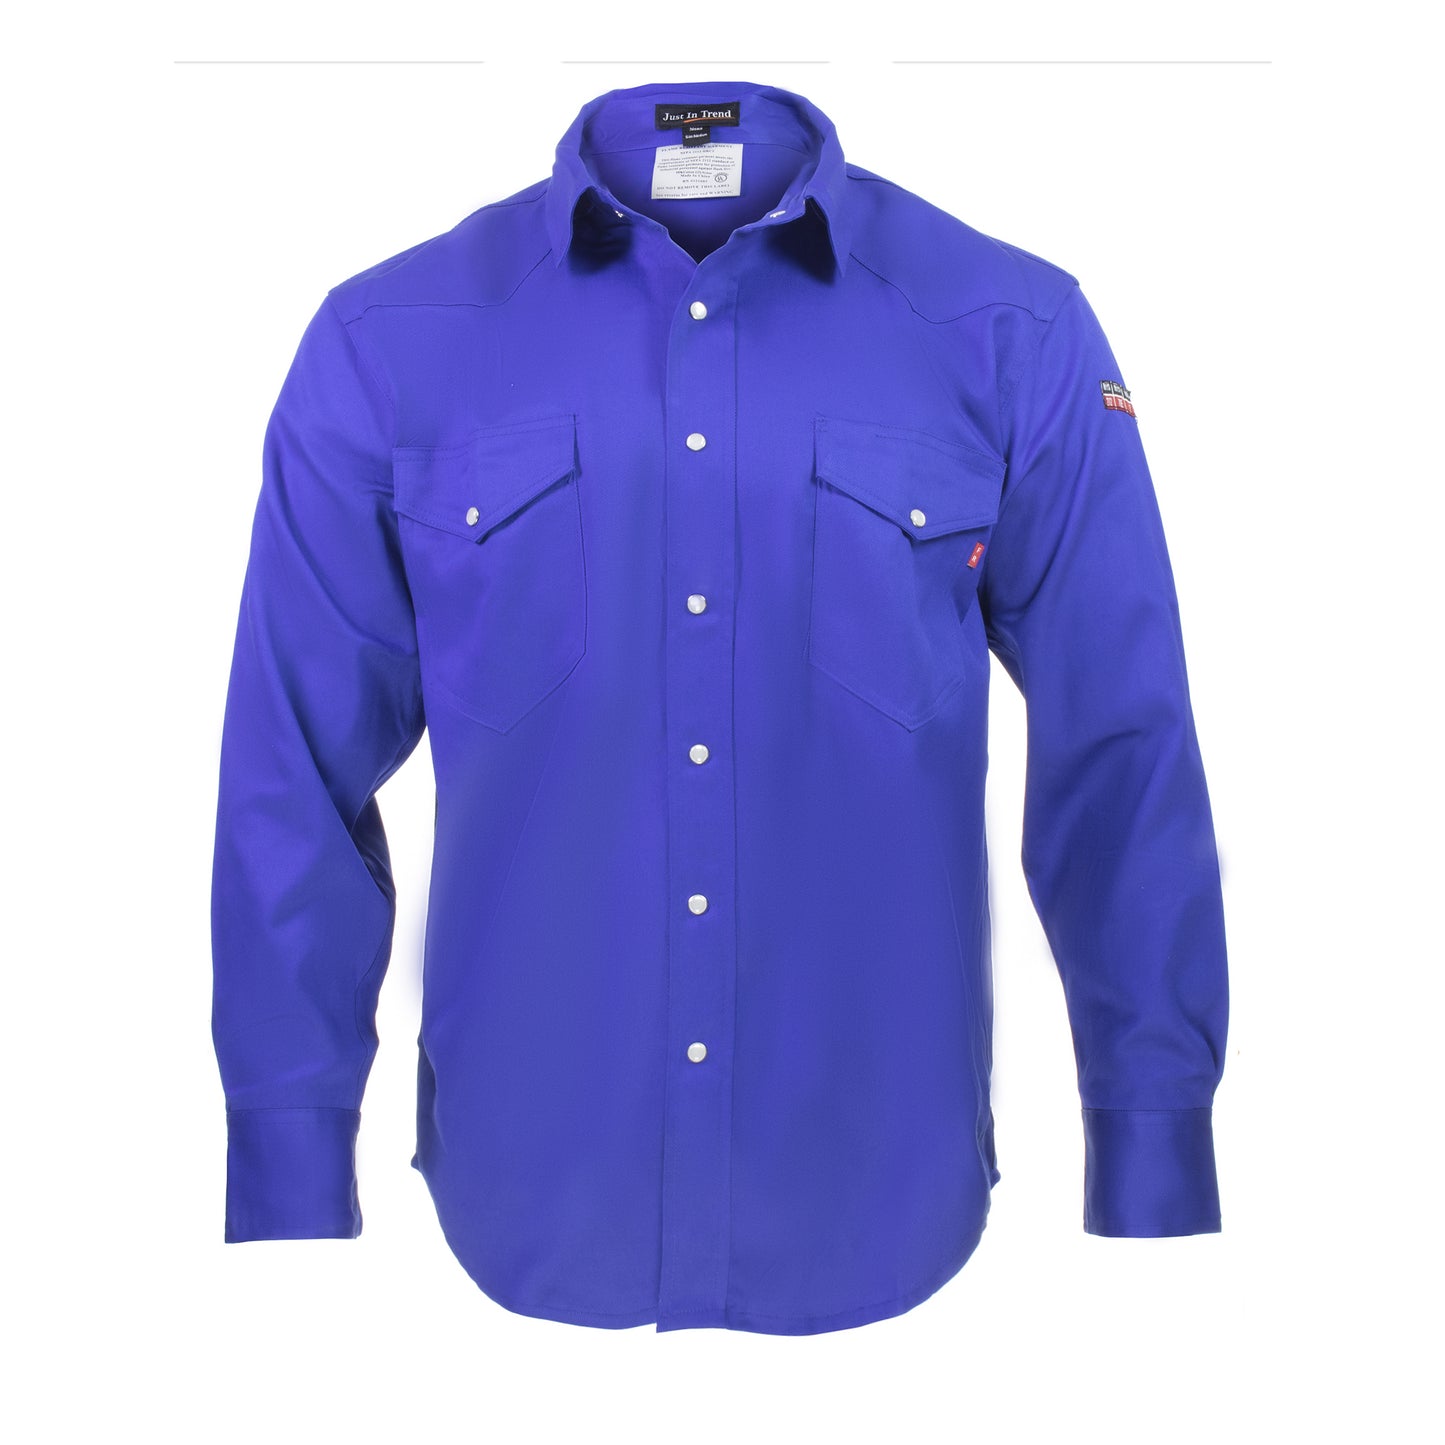 Flame Resistant FR Shirt – 88% C /12% N – 7 oz